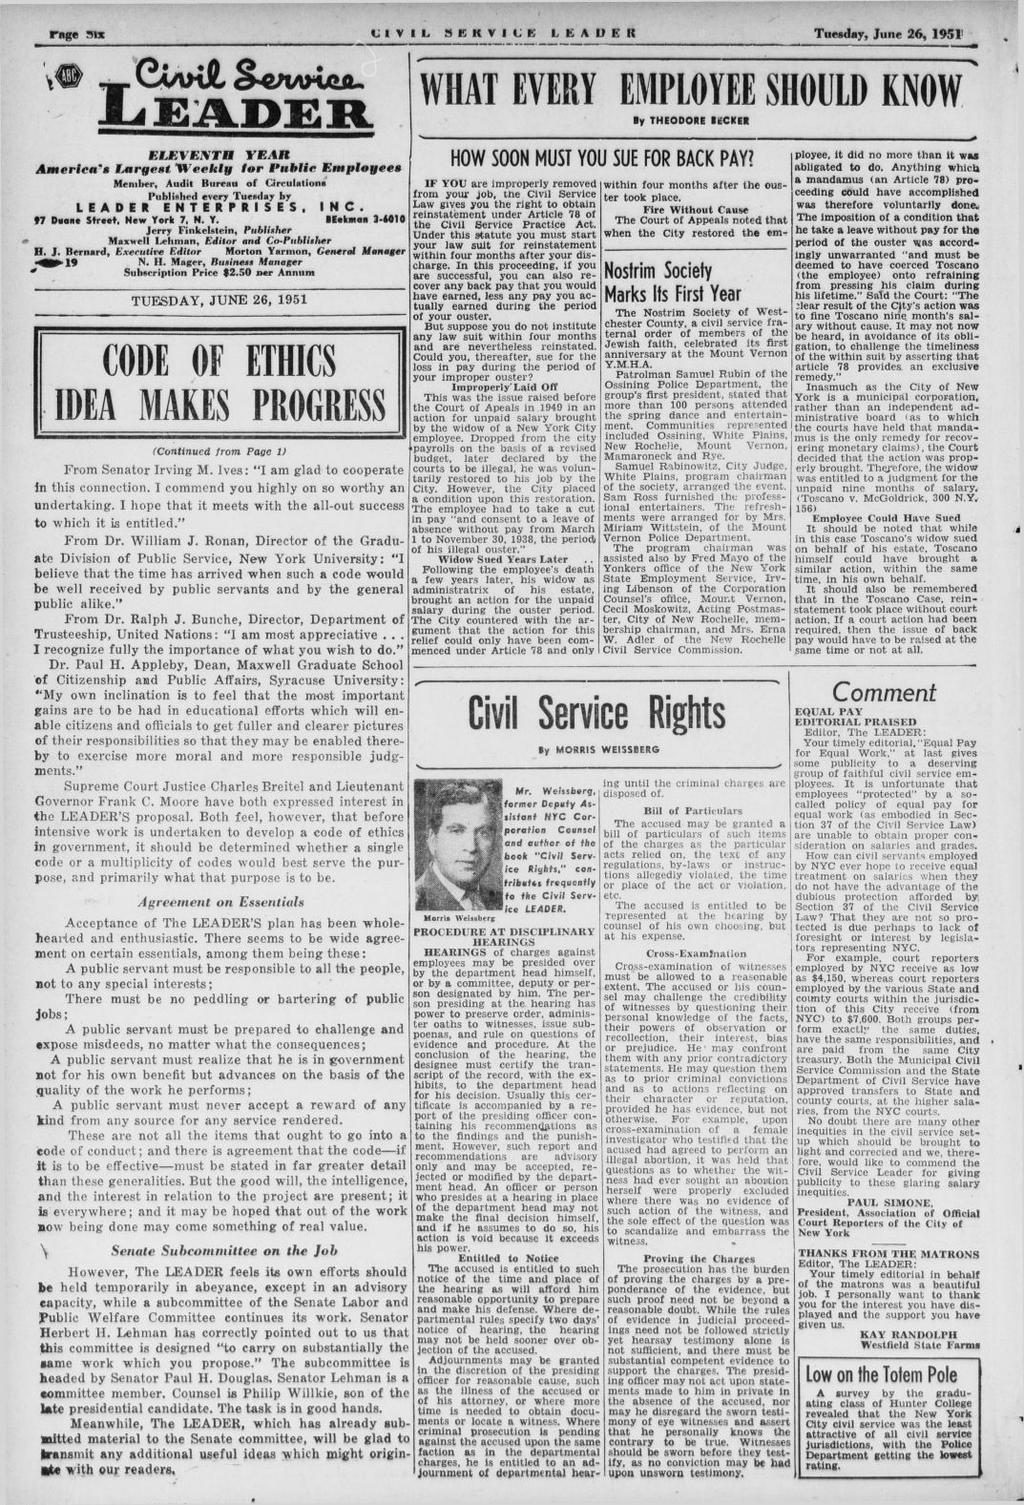 rage six fjlvil SEKVIUf!; L E A D E R Tuesday, June 26, 1951' ^ Cvuiit S«;iAneA.